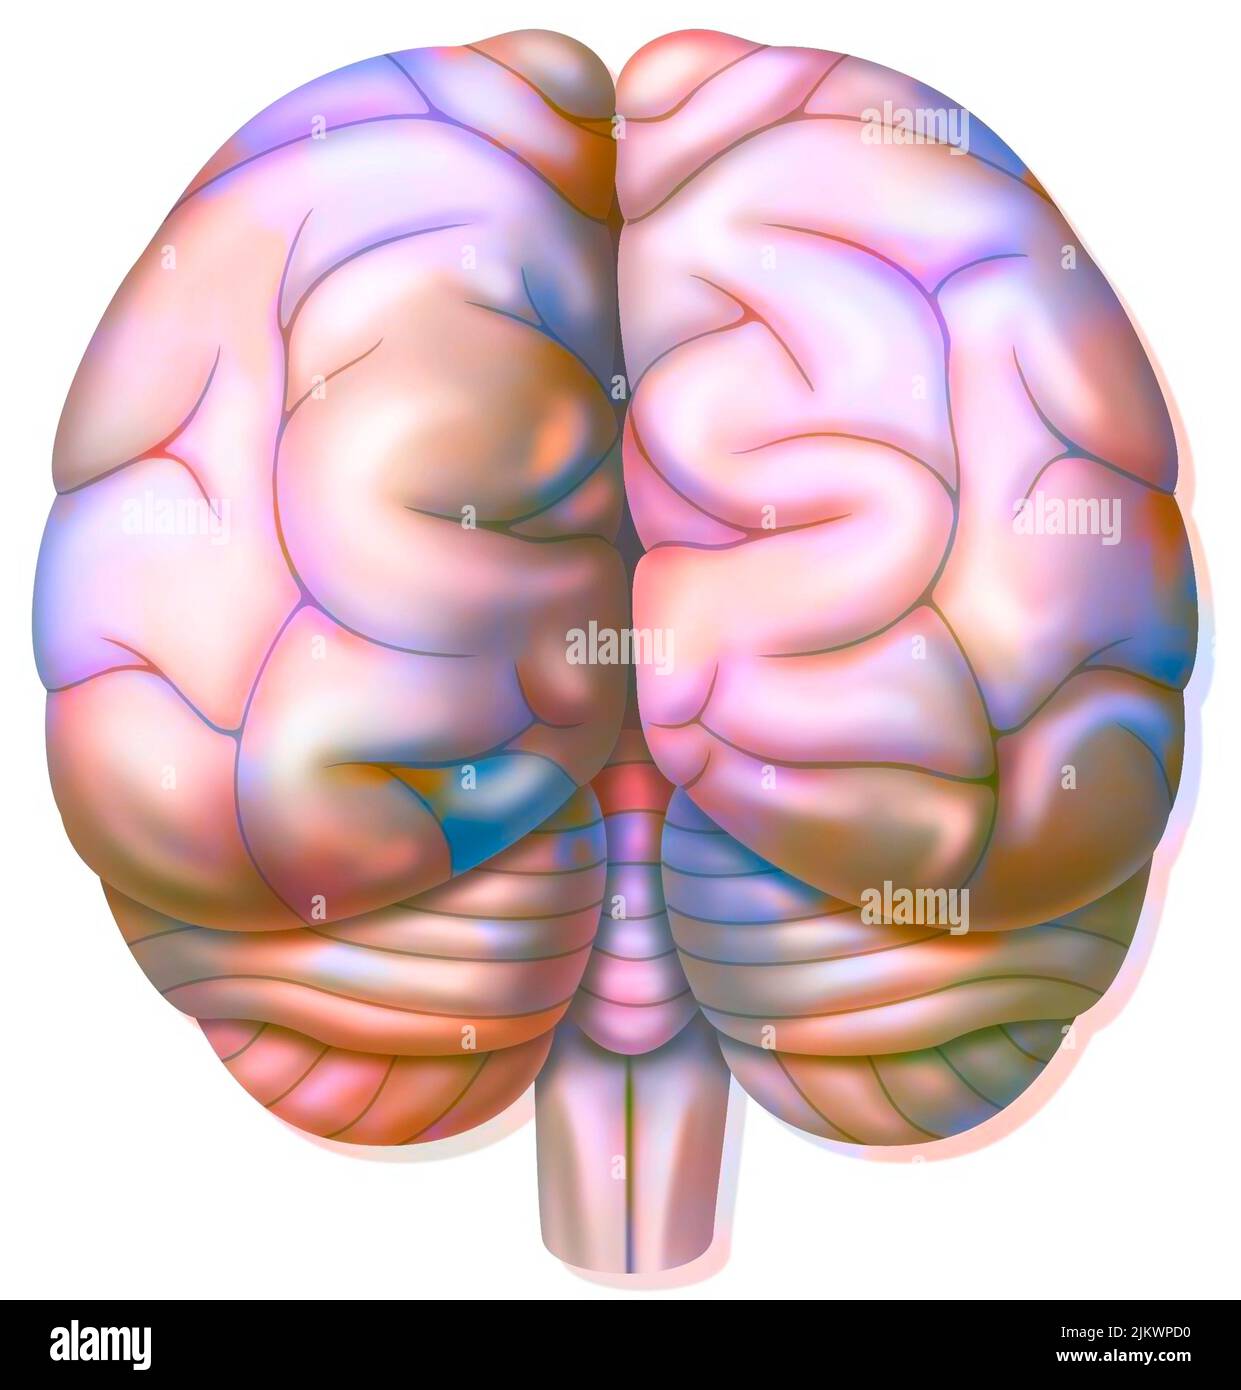 Gehirn mit okzipitalen, parietalen, temporalen Lappen, Zerebellum. Stockfoto